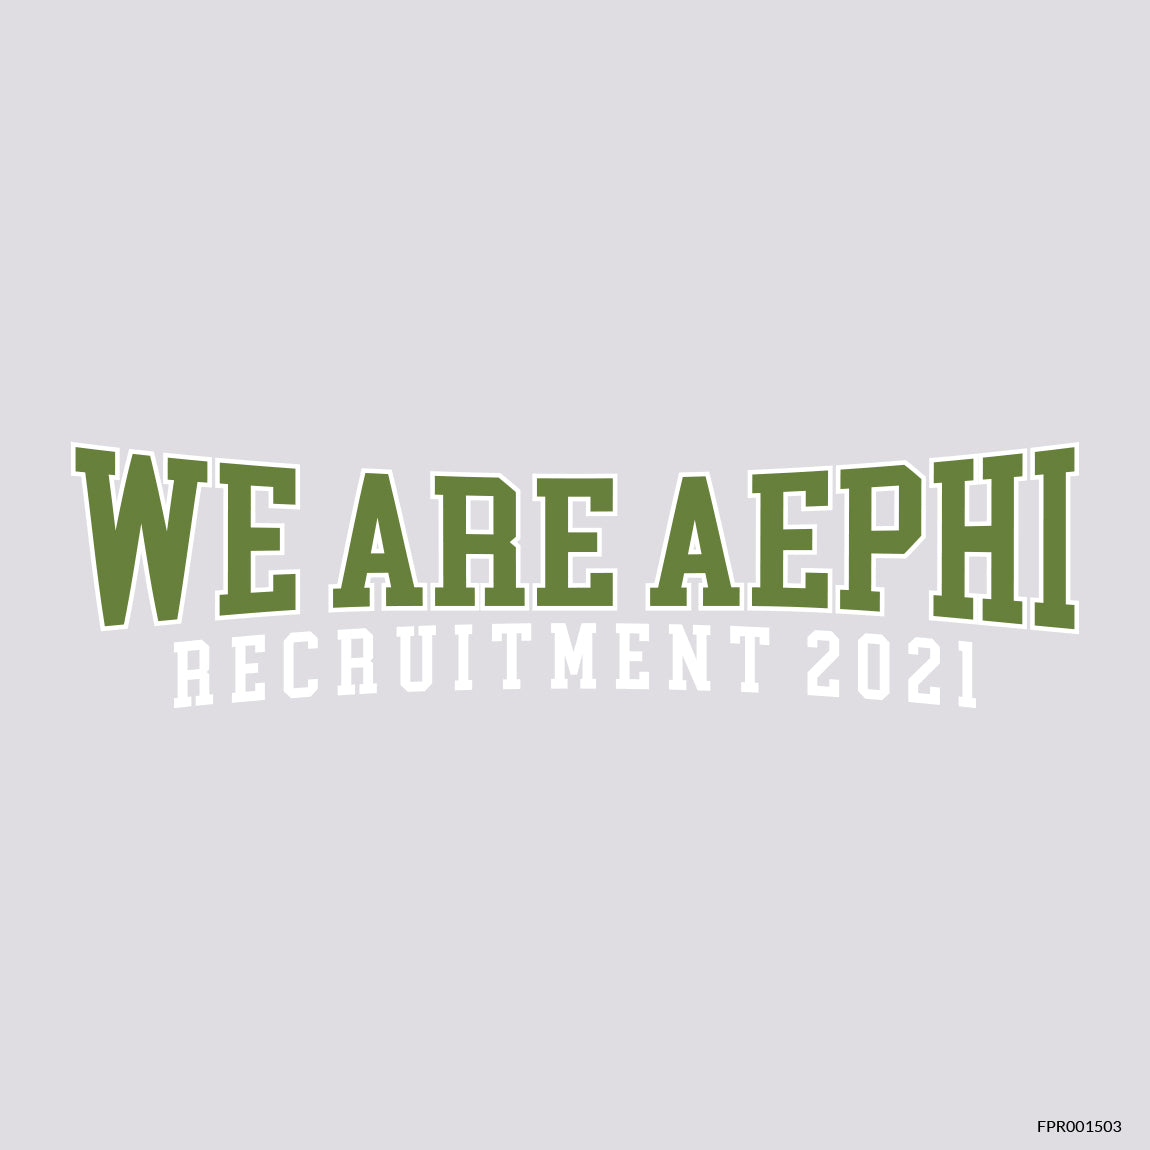 We are AEPHI